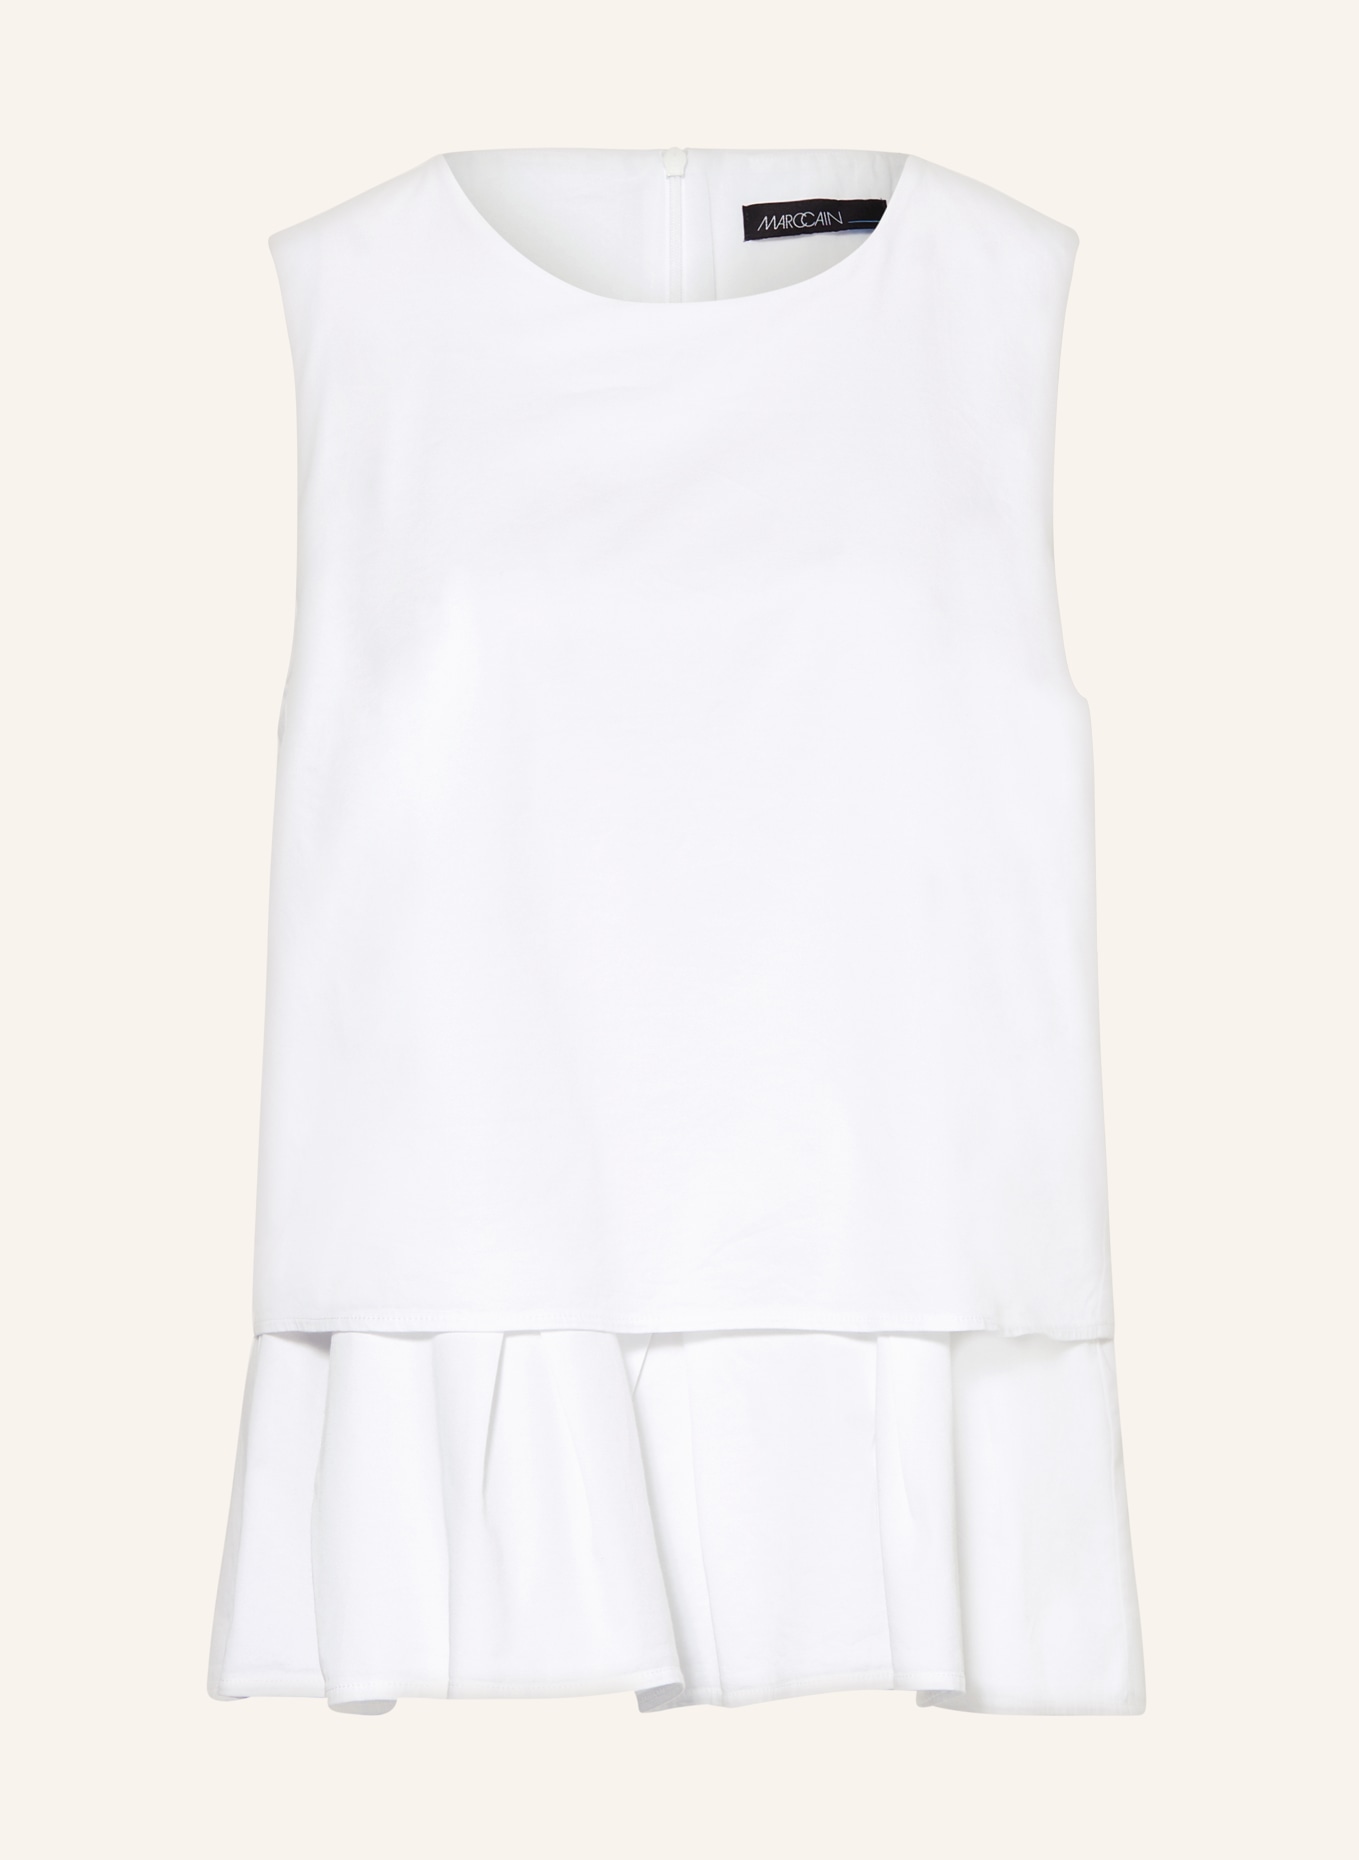 MARC CAIN Blouse top, Color: WHITE (Image 1)